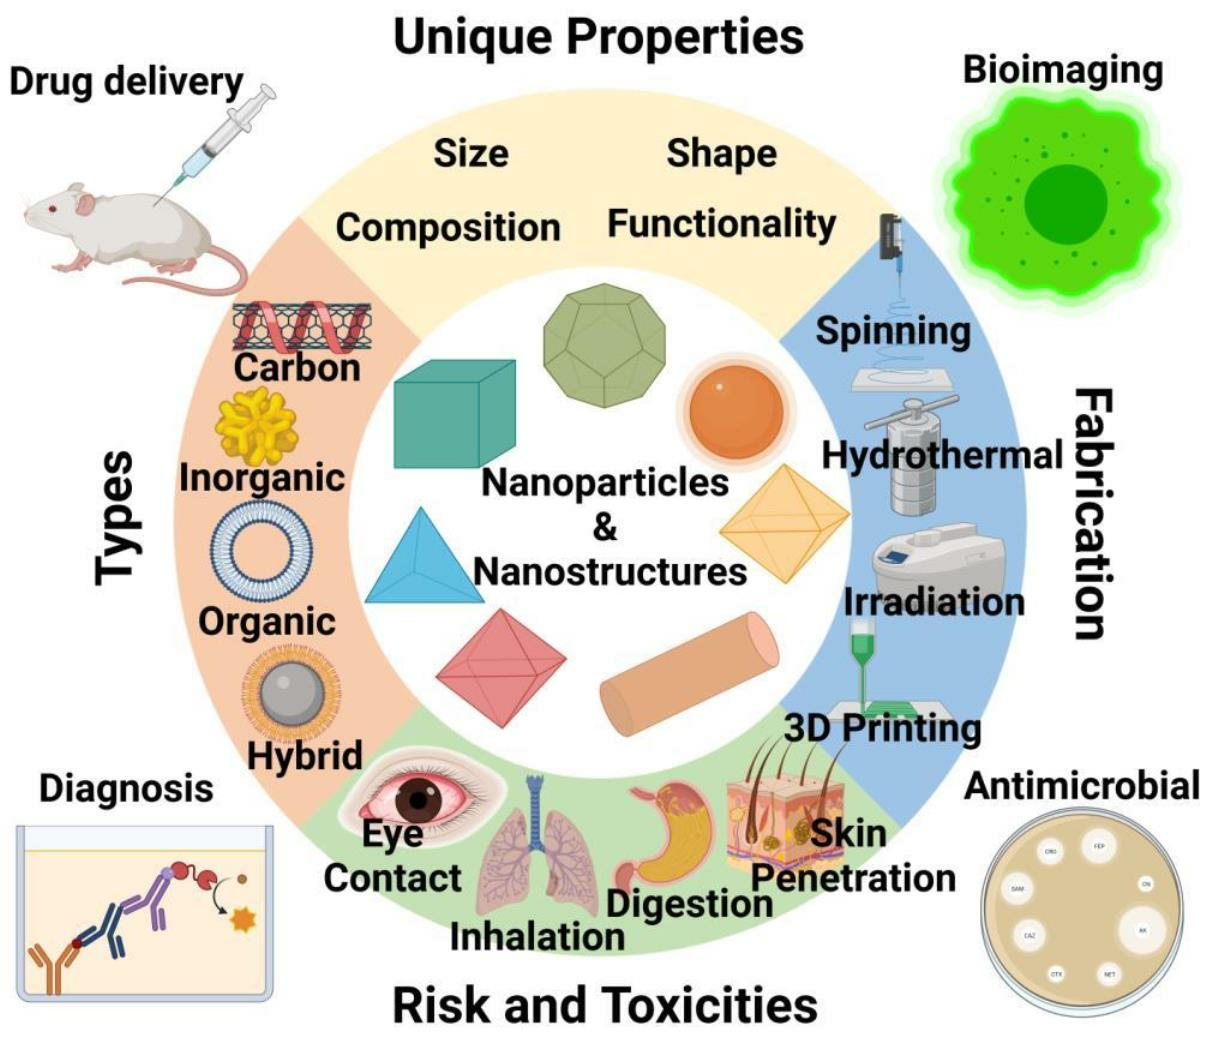 nanoparticles research topics